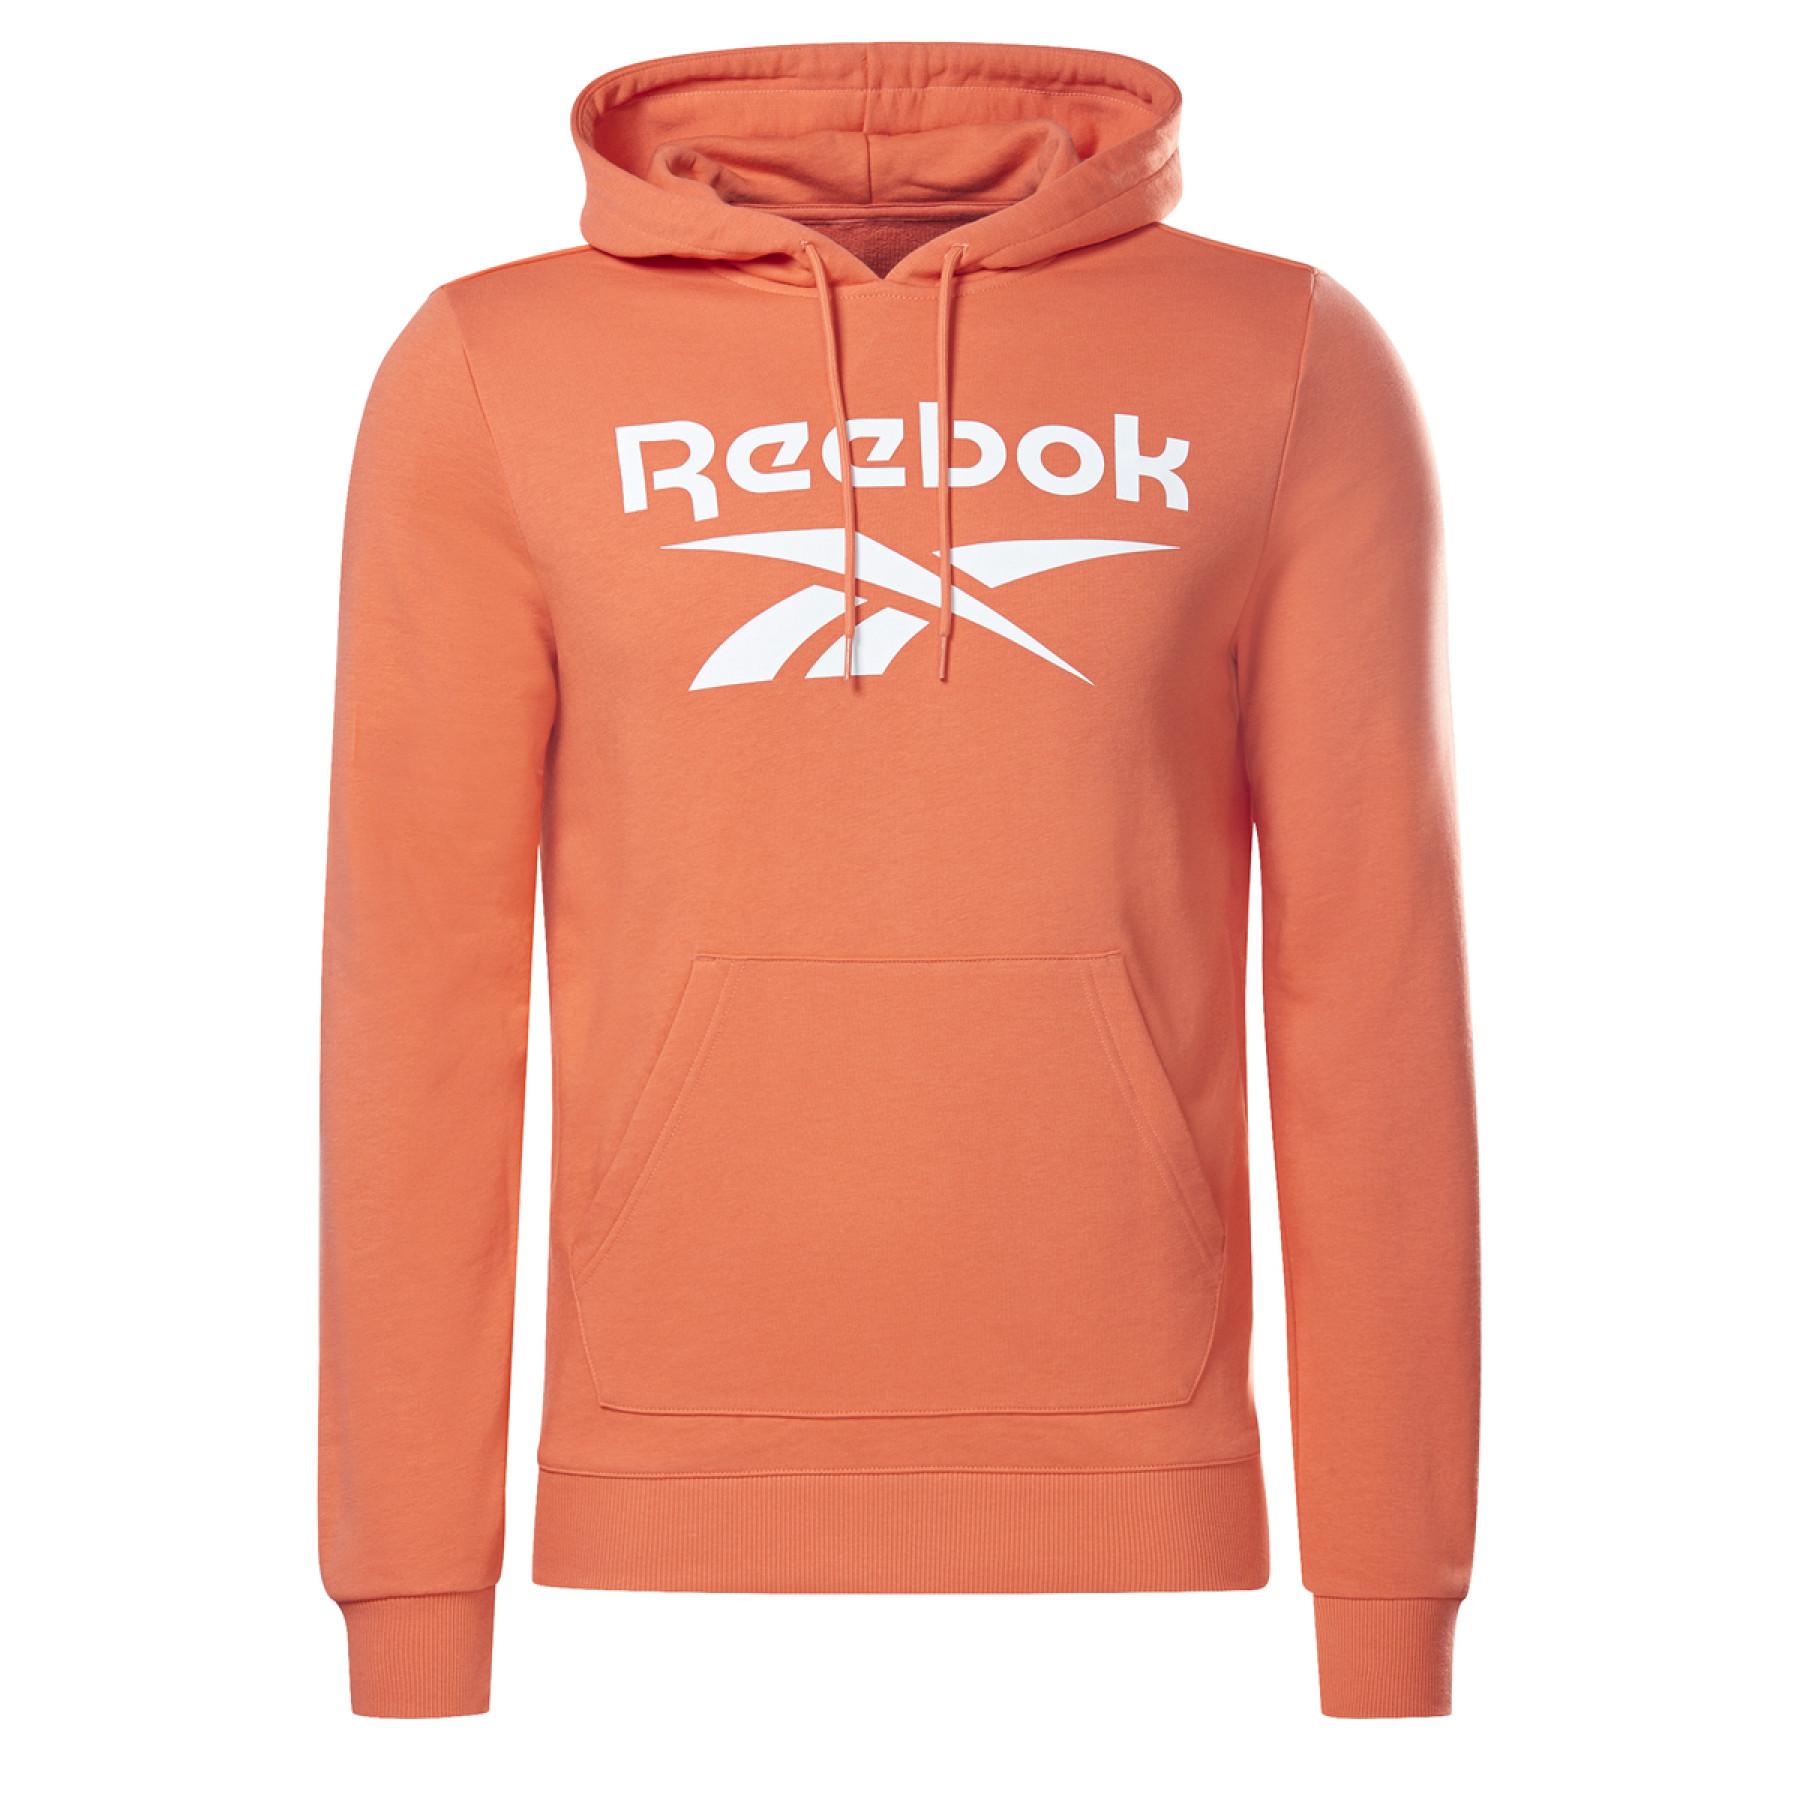 Hooded sweatshirt Reebok Identity Big Logo